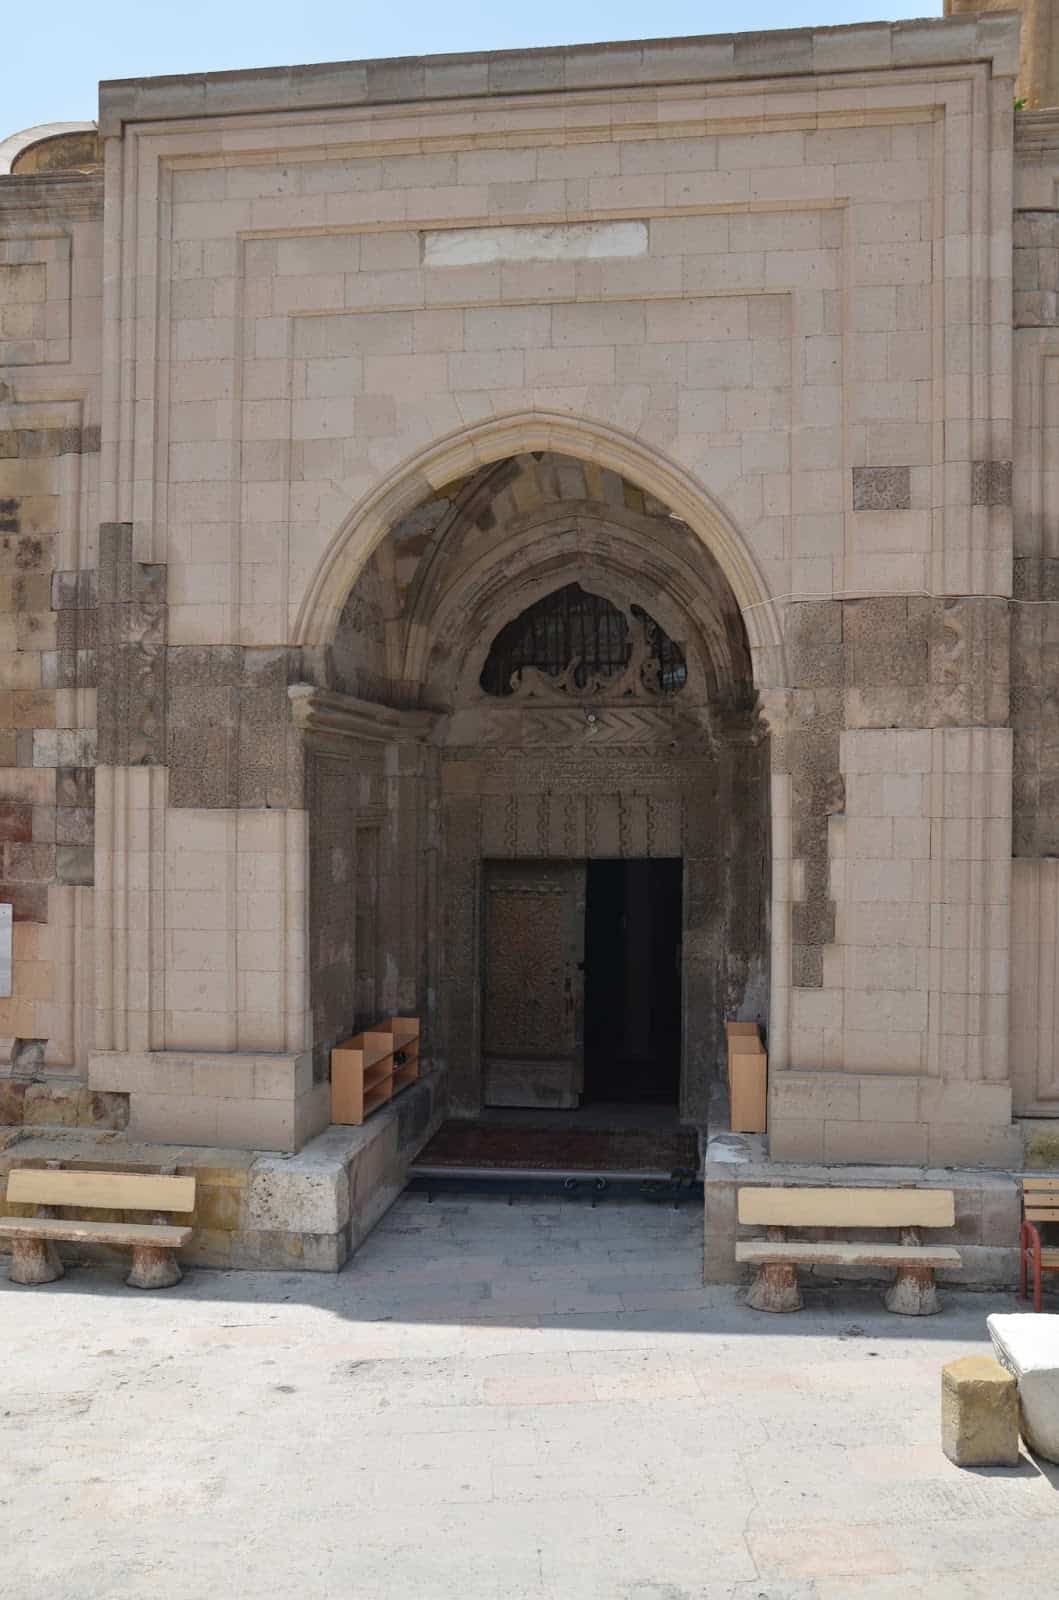 Entrance portal of the Sungur Bey Mosque